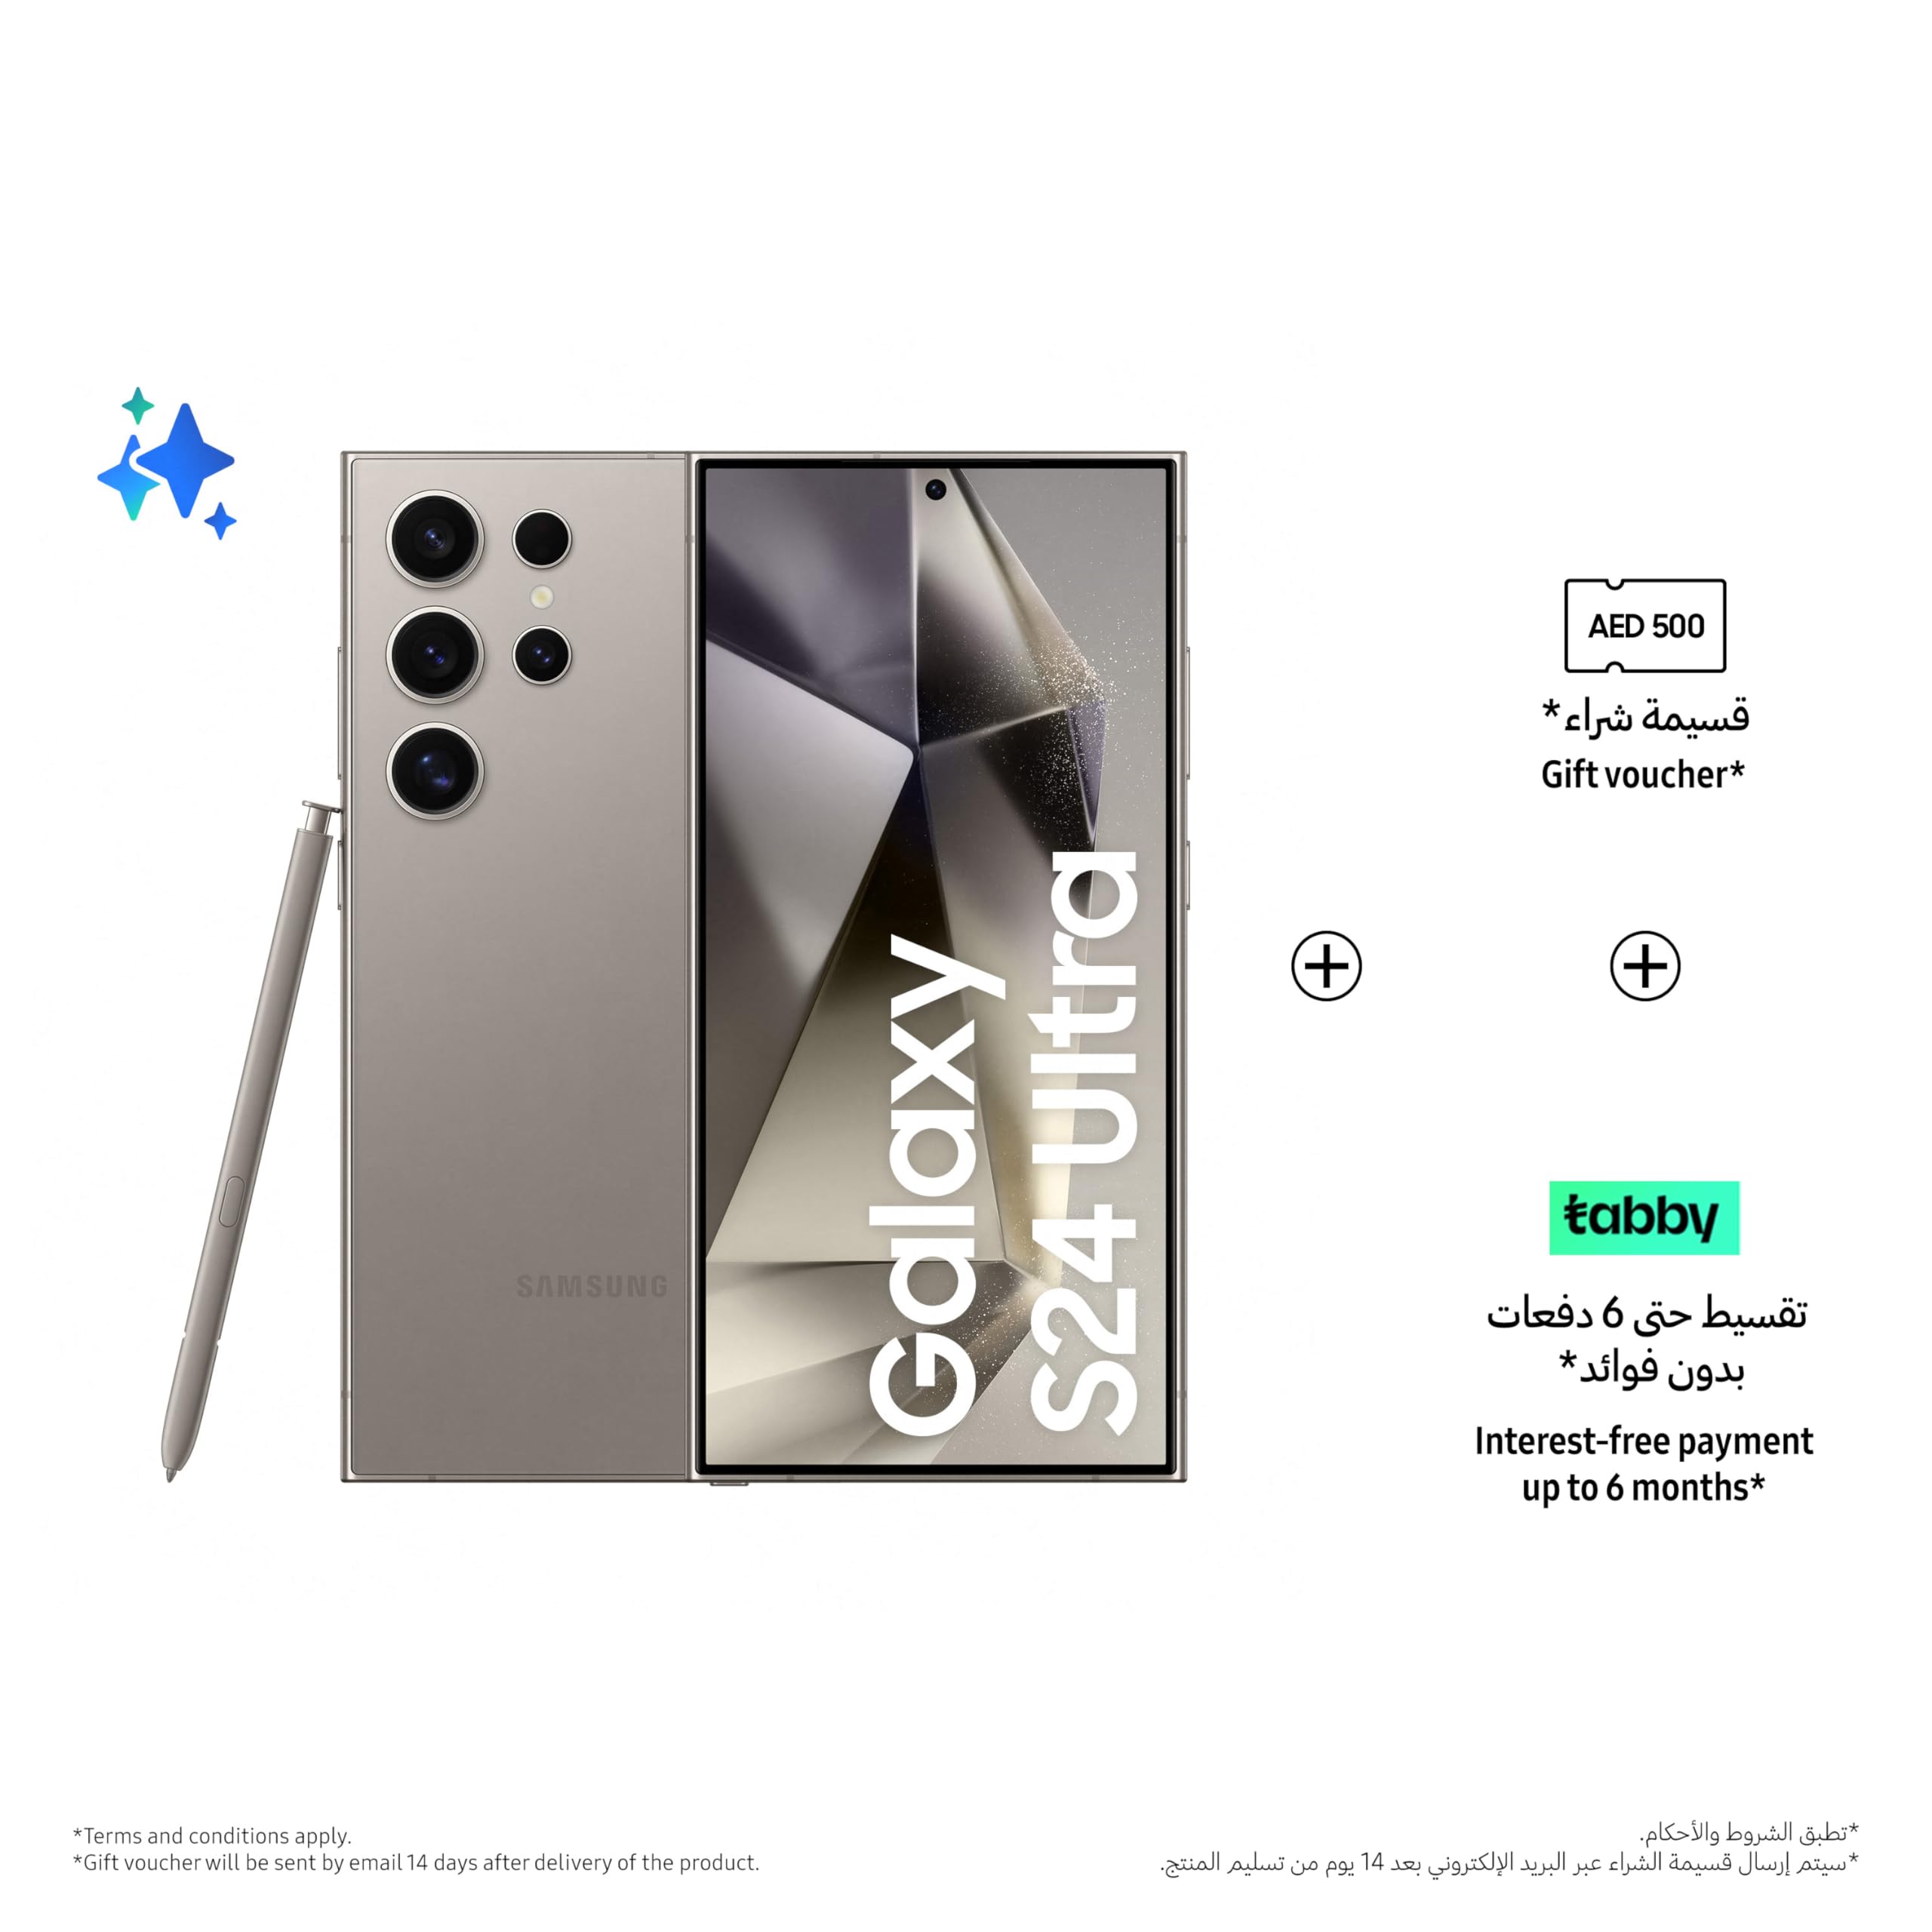 SAMSUNG Galaxy S24 Ultra, AI Phone, 1TB Storage, Titanium Gray, 12GB RAM, Android Smartphone, 200MP Camera, S Pen, Long Battery Life (UAE Version)